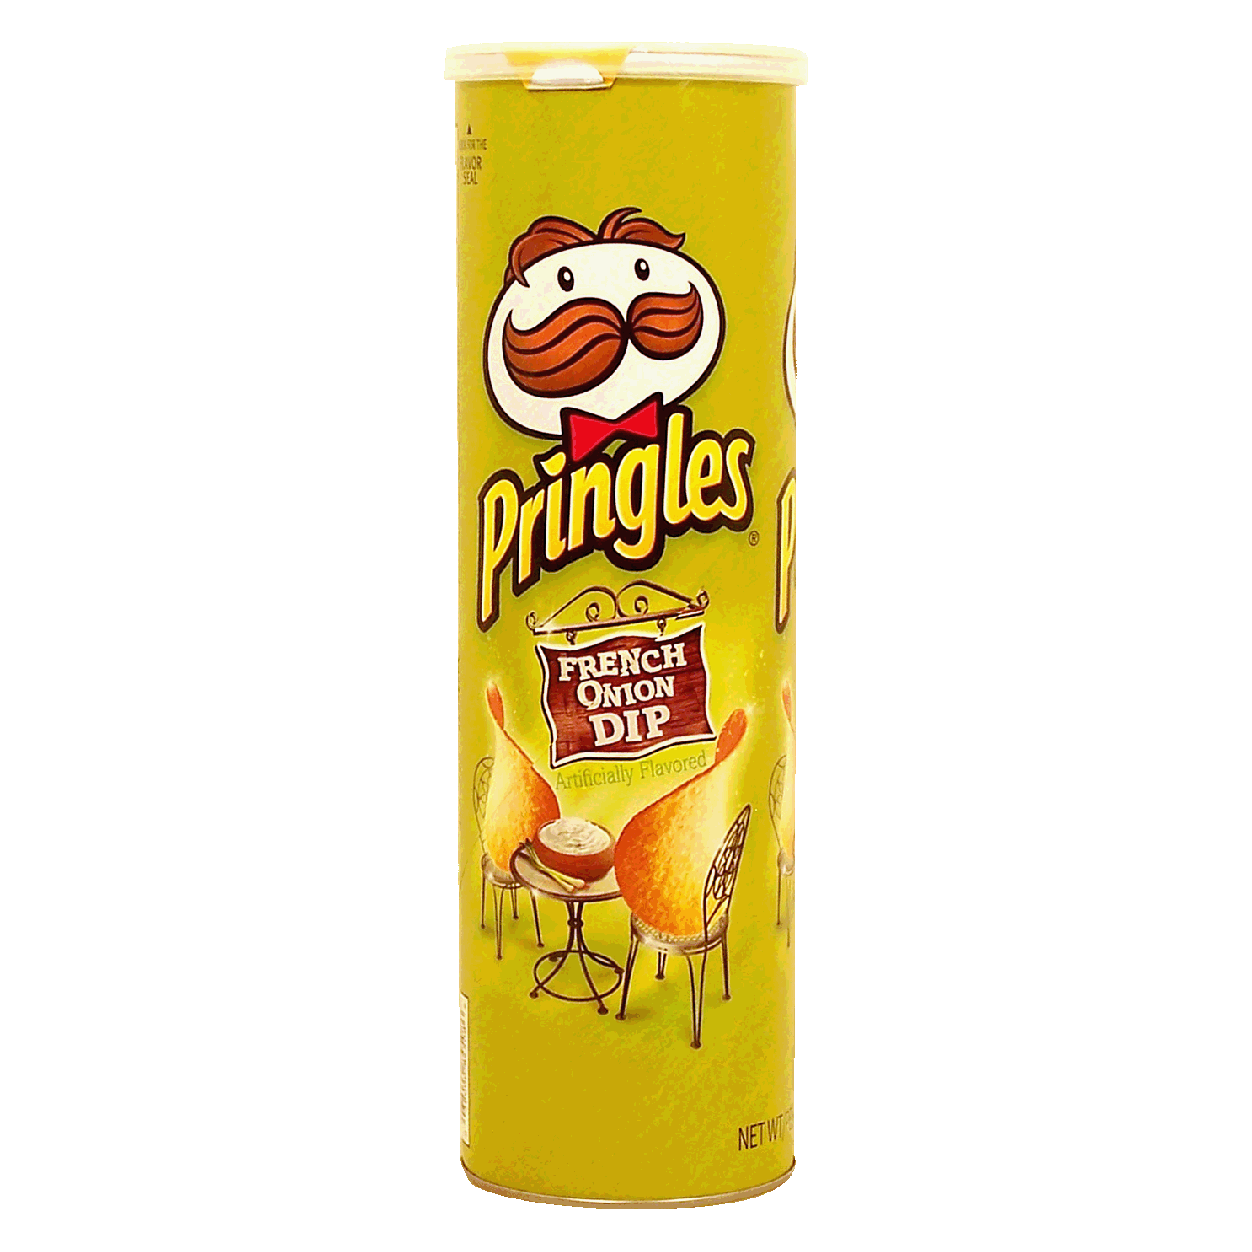 Pringles french onion dip flavored potato crisps 5.96oz - Sour Cream ...